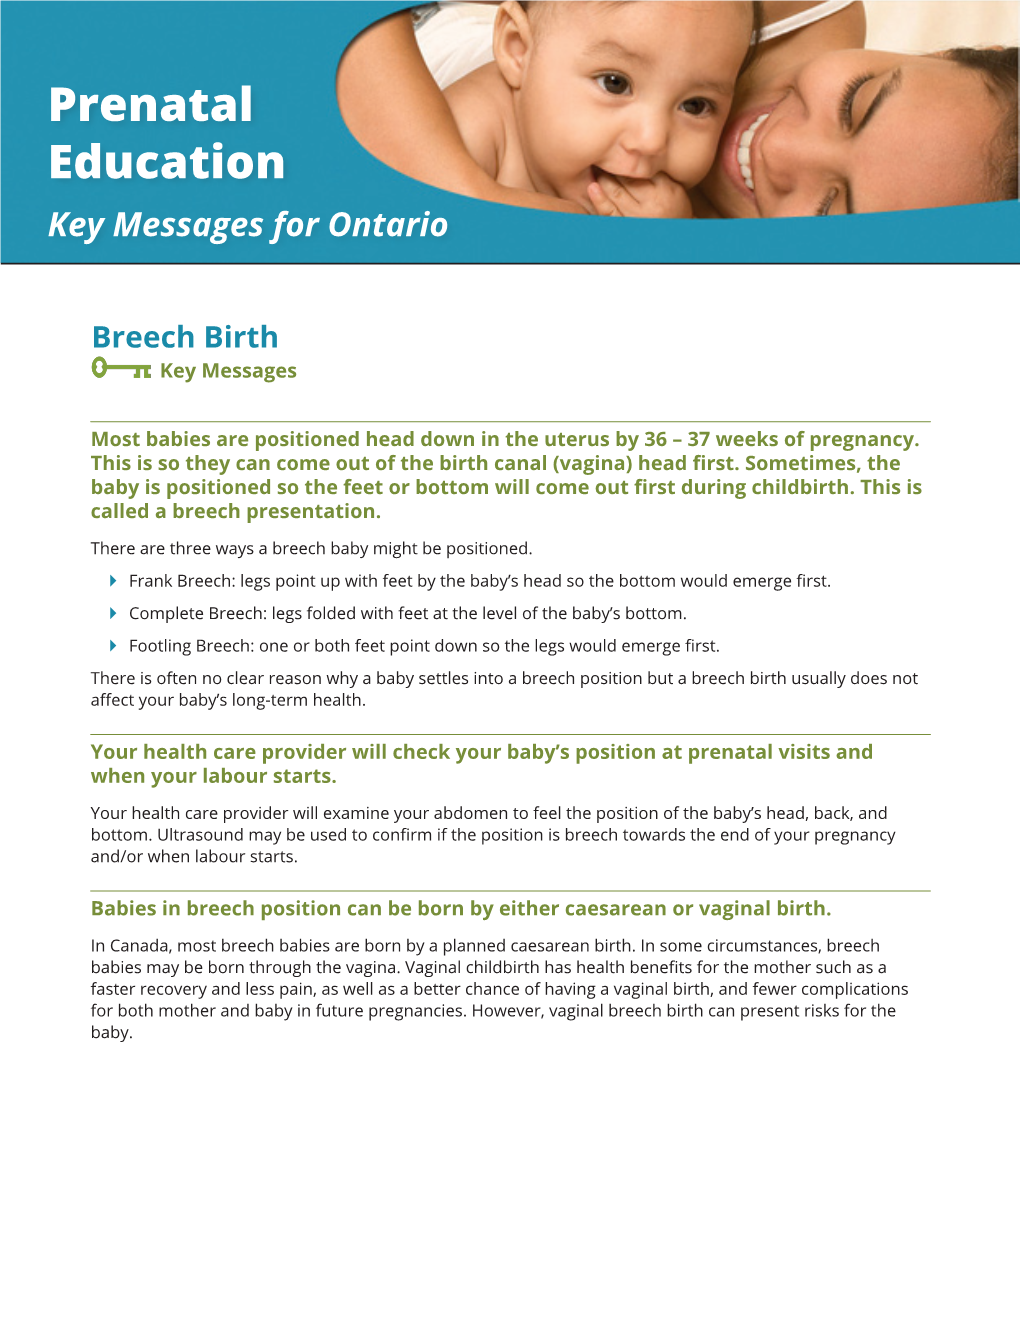 Breech Birth Key Messages